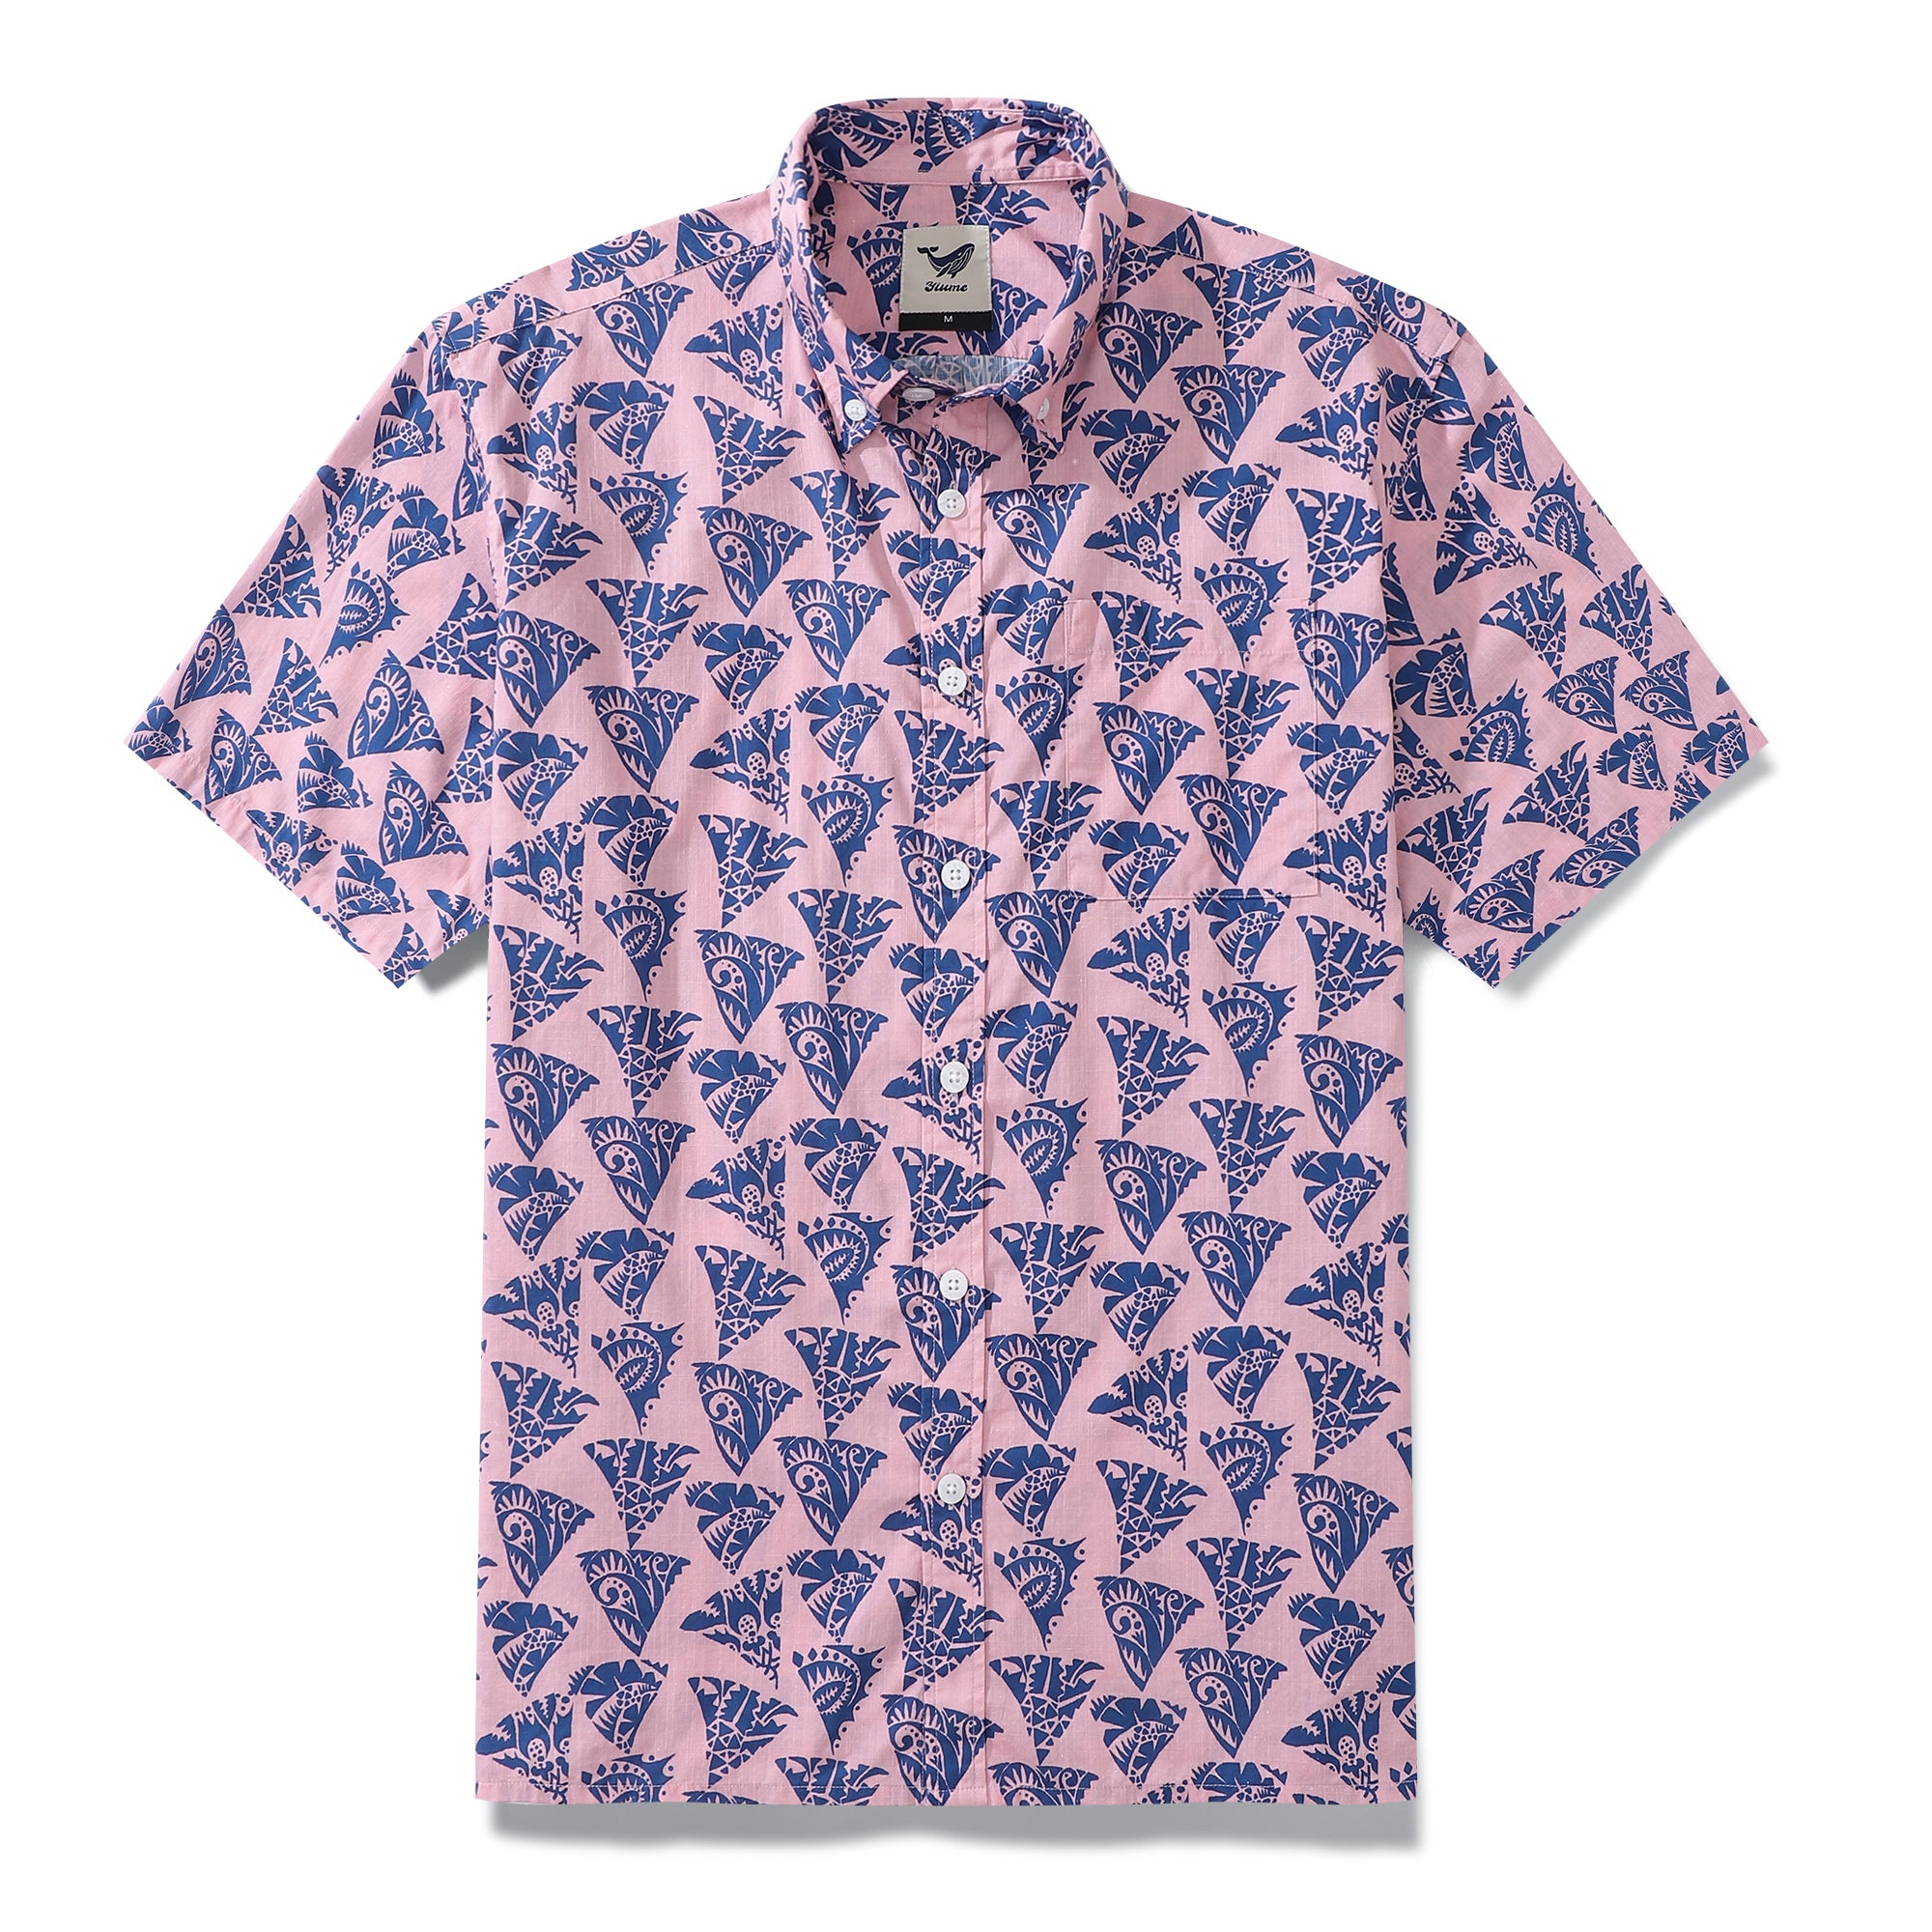 Men's Hawaiian Shirt Tattoos and Totems Print Cotton Button-down Short Sleeve Aloha Shirt